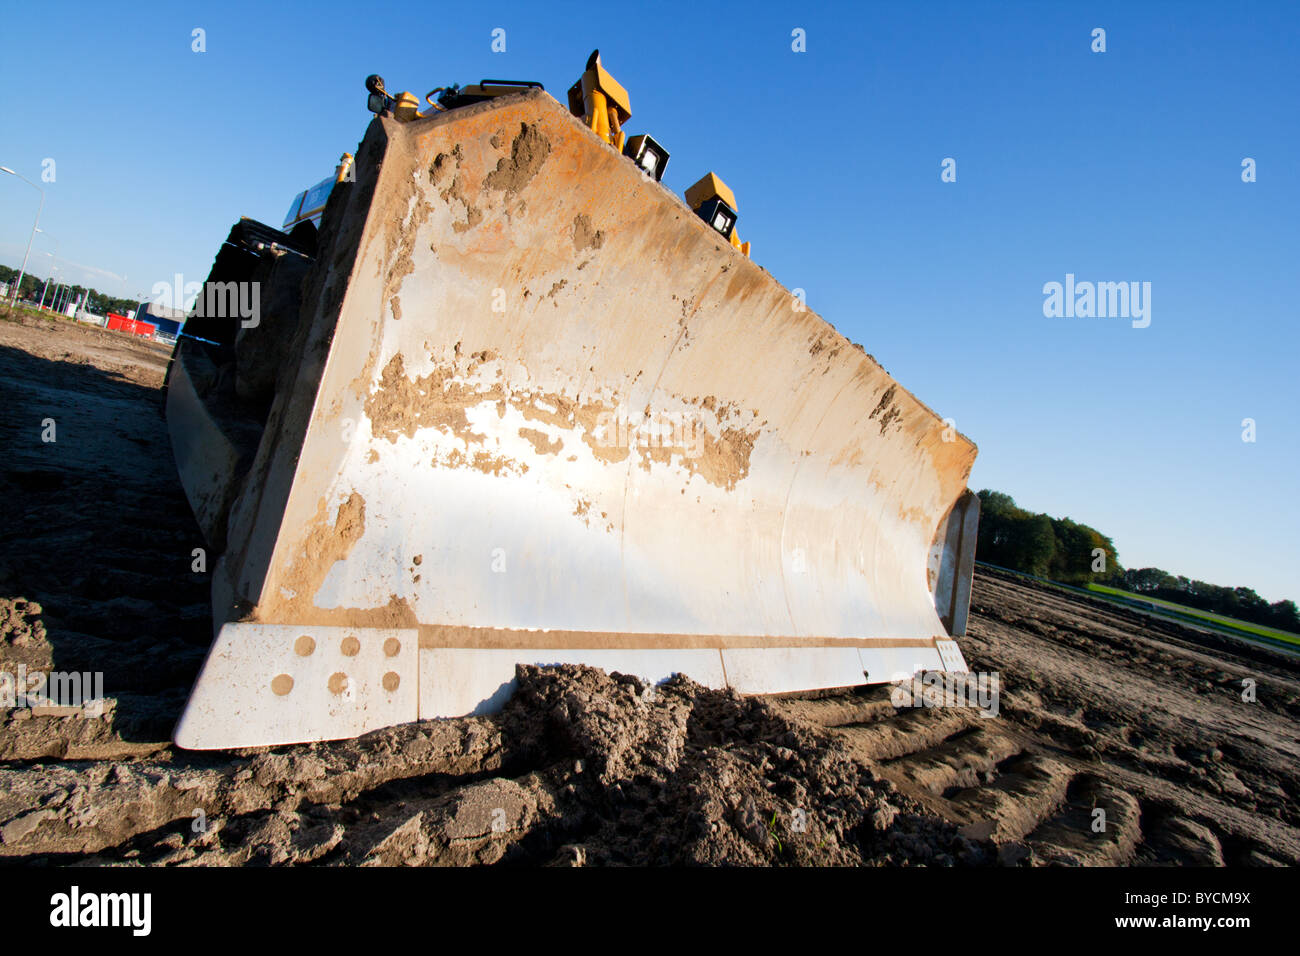 Yellow bulldozer at work Stock Photo